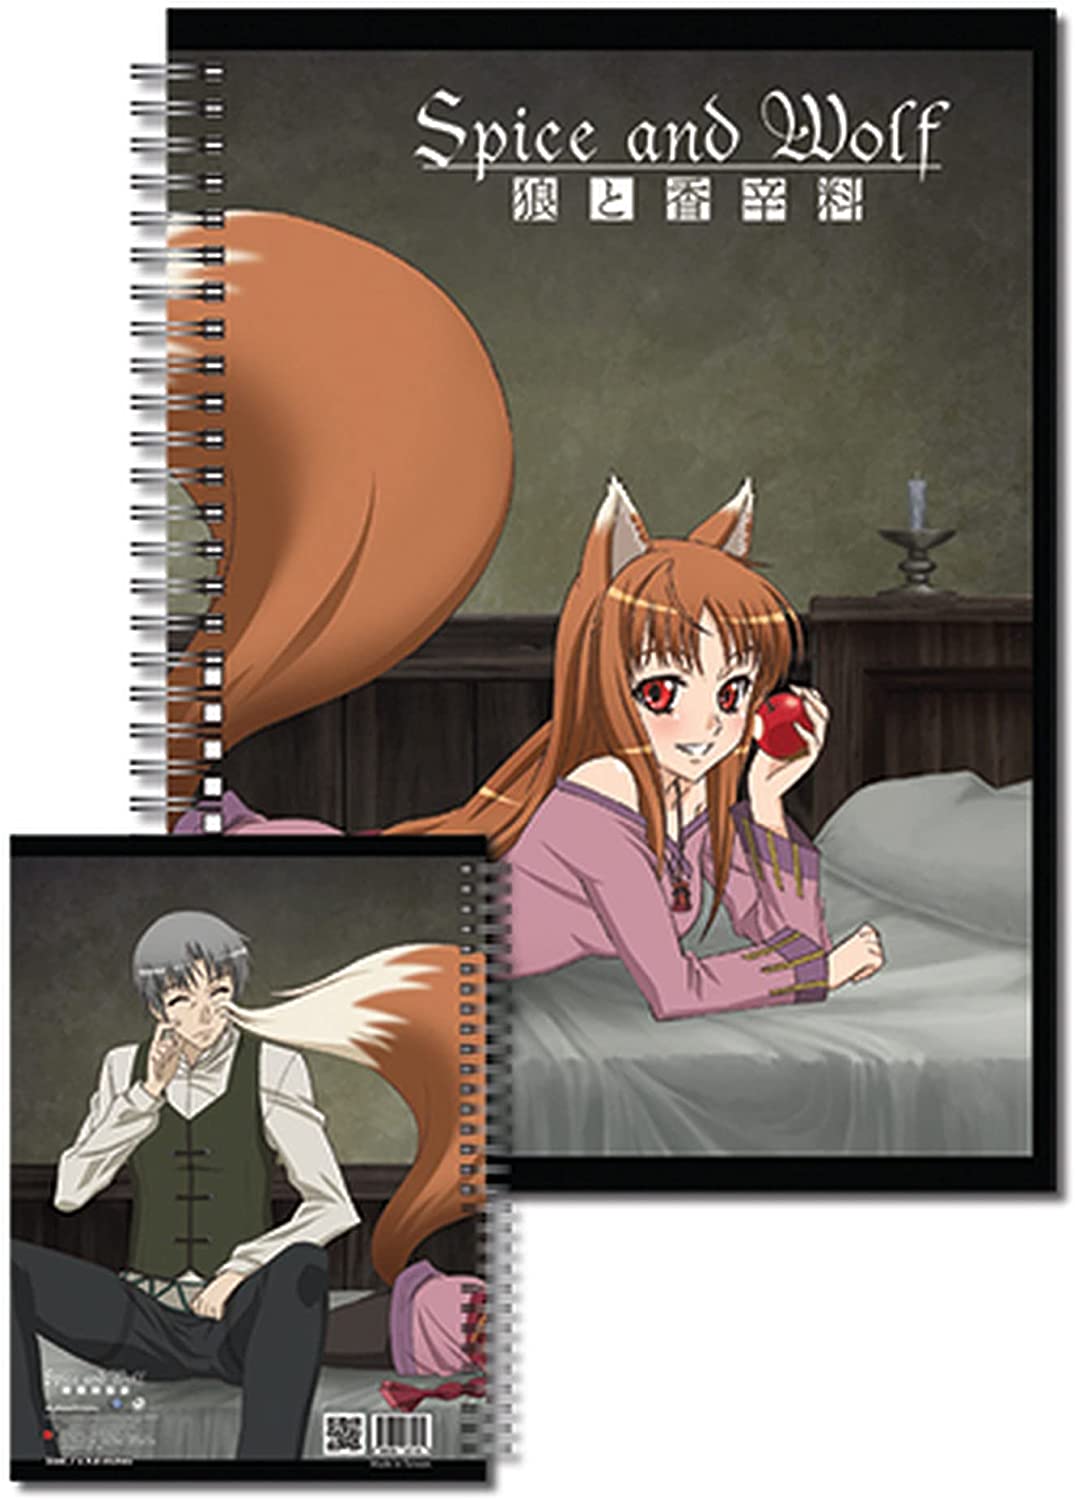 Spice & Wolf Spiral Anime Notebook